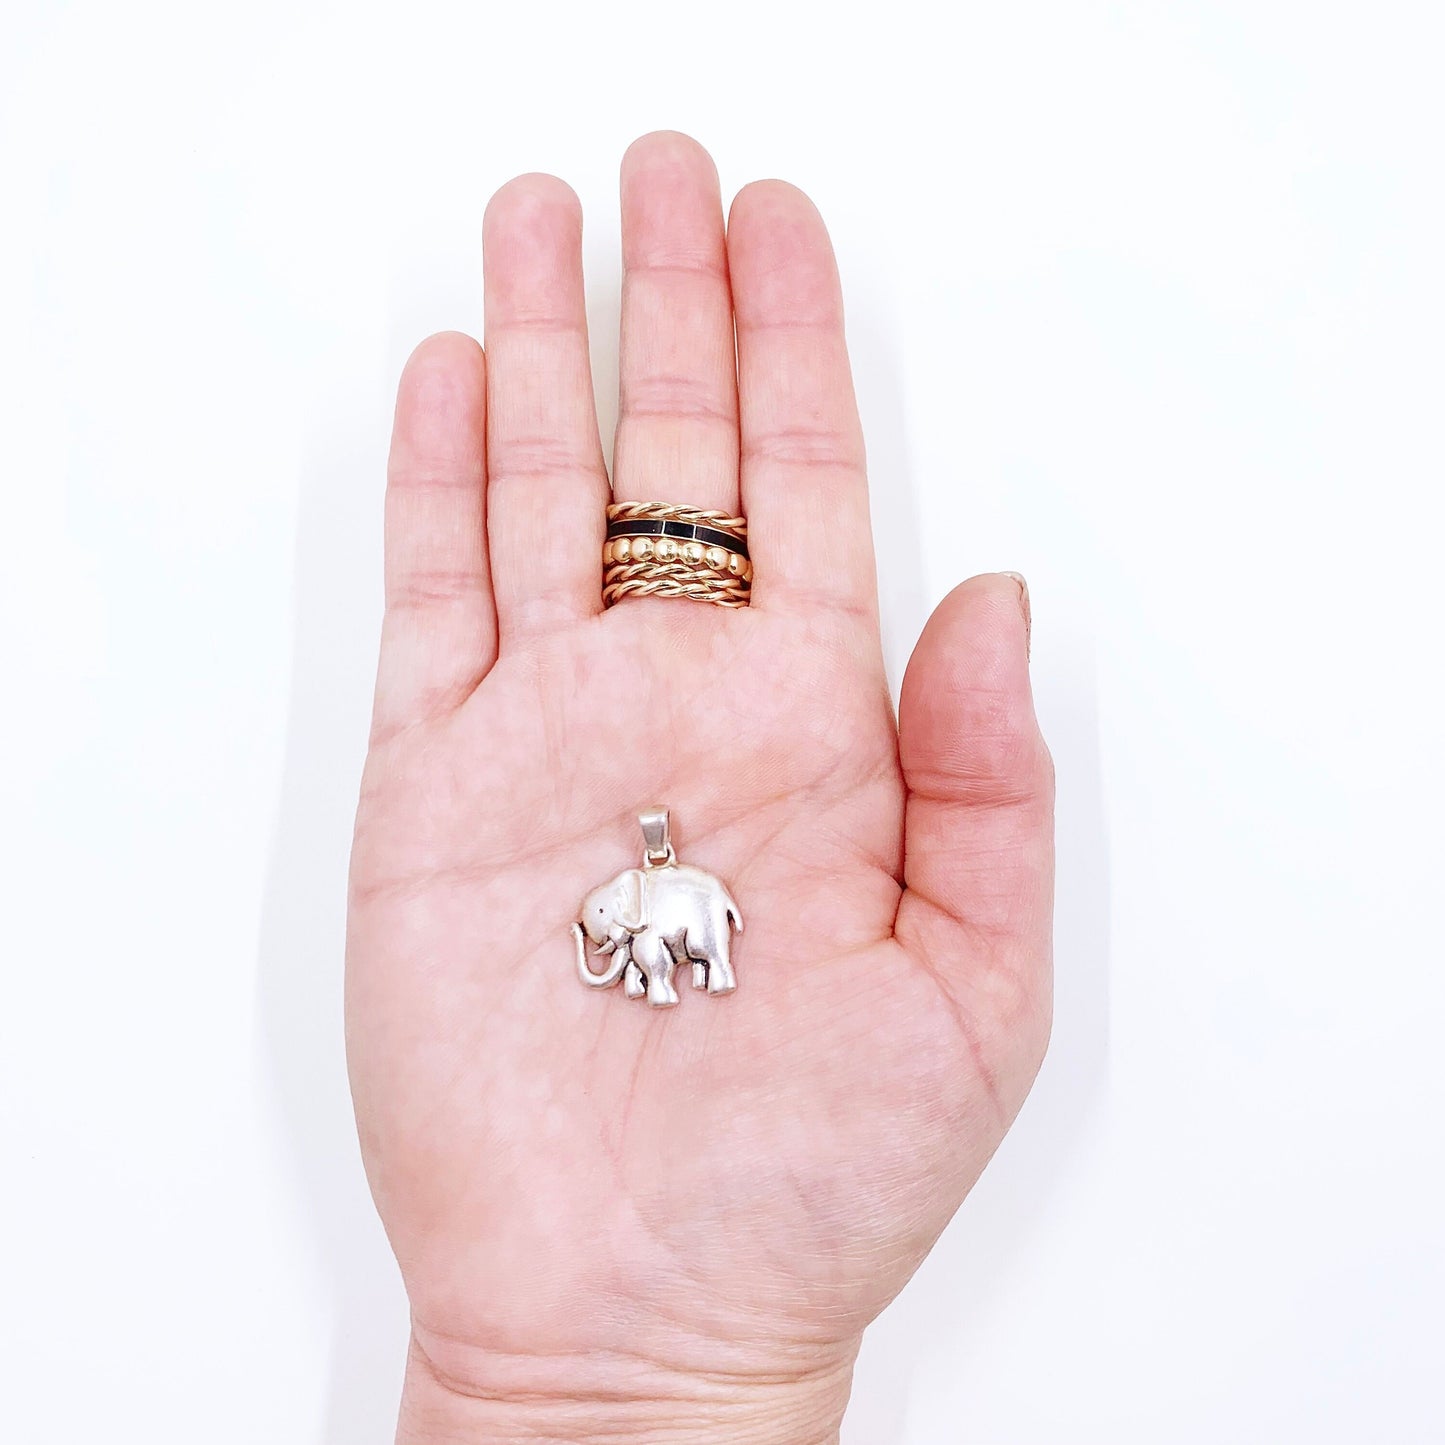 Vintage Silver Elephant Pendant | Lucky Elephant Charm